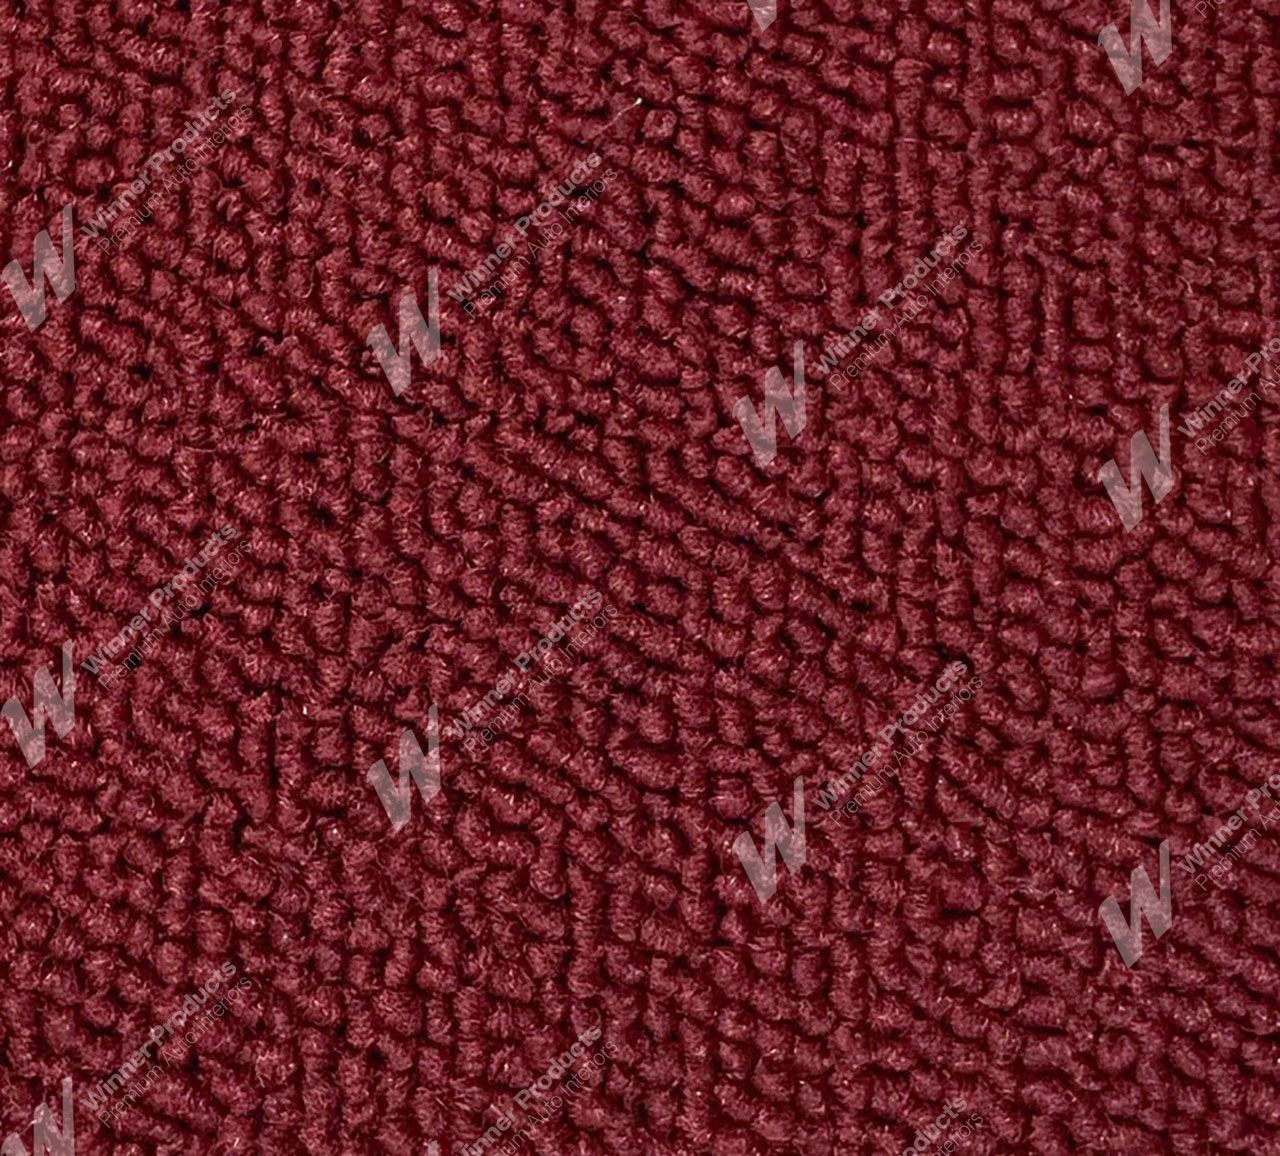 Holden Premier HT Premier Wagon 12T Morocco Red & Castillion Weave Carpet (Image 1 of 1)